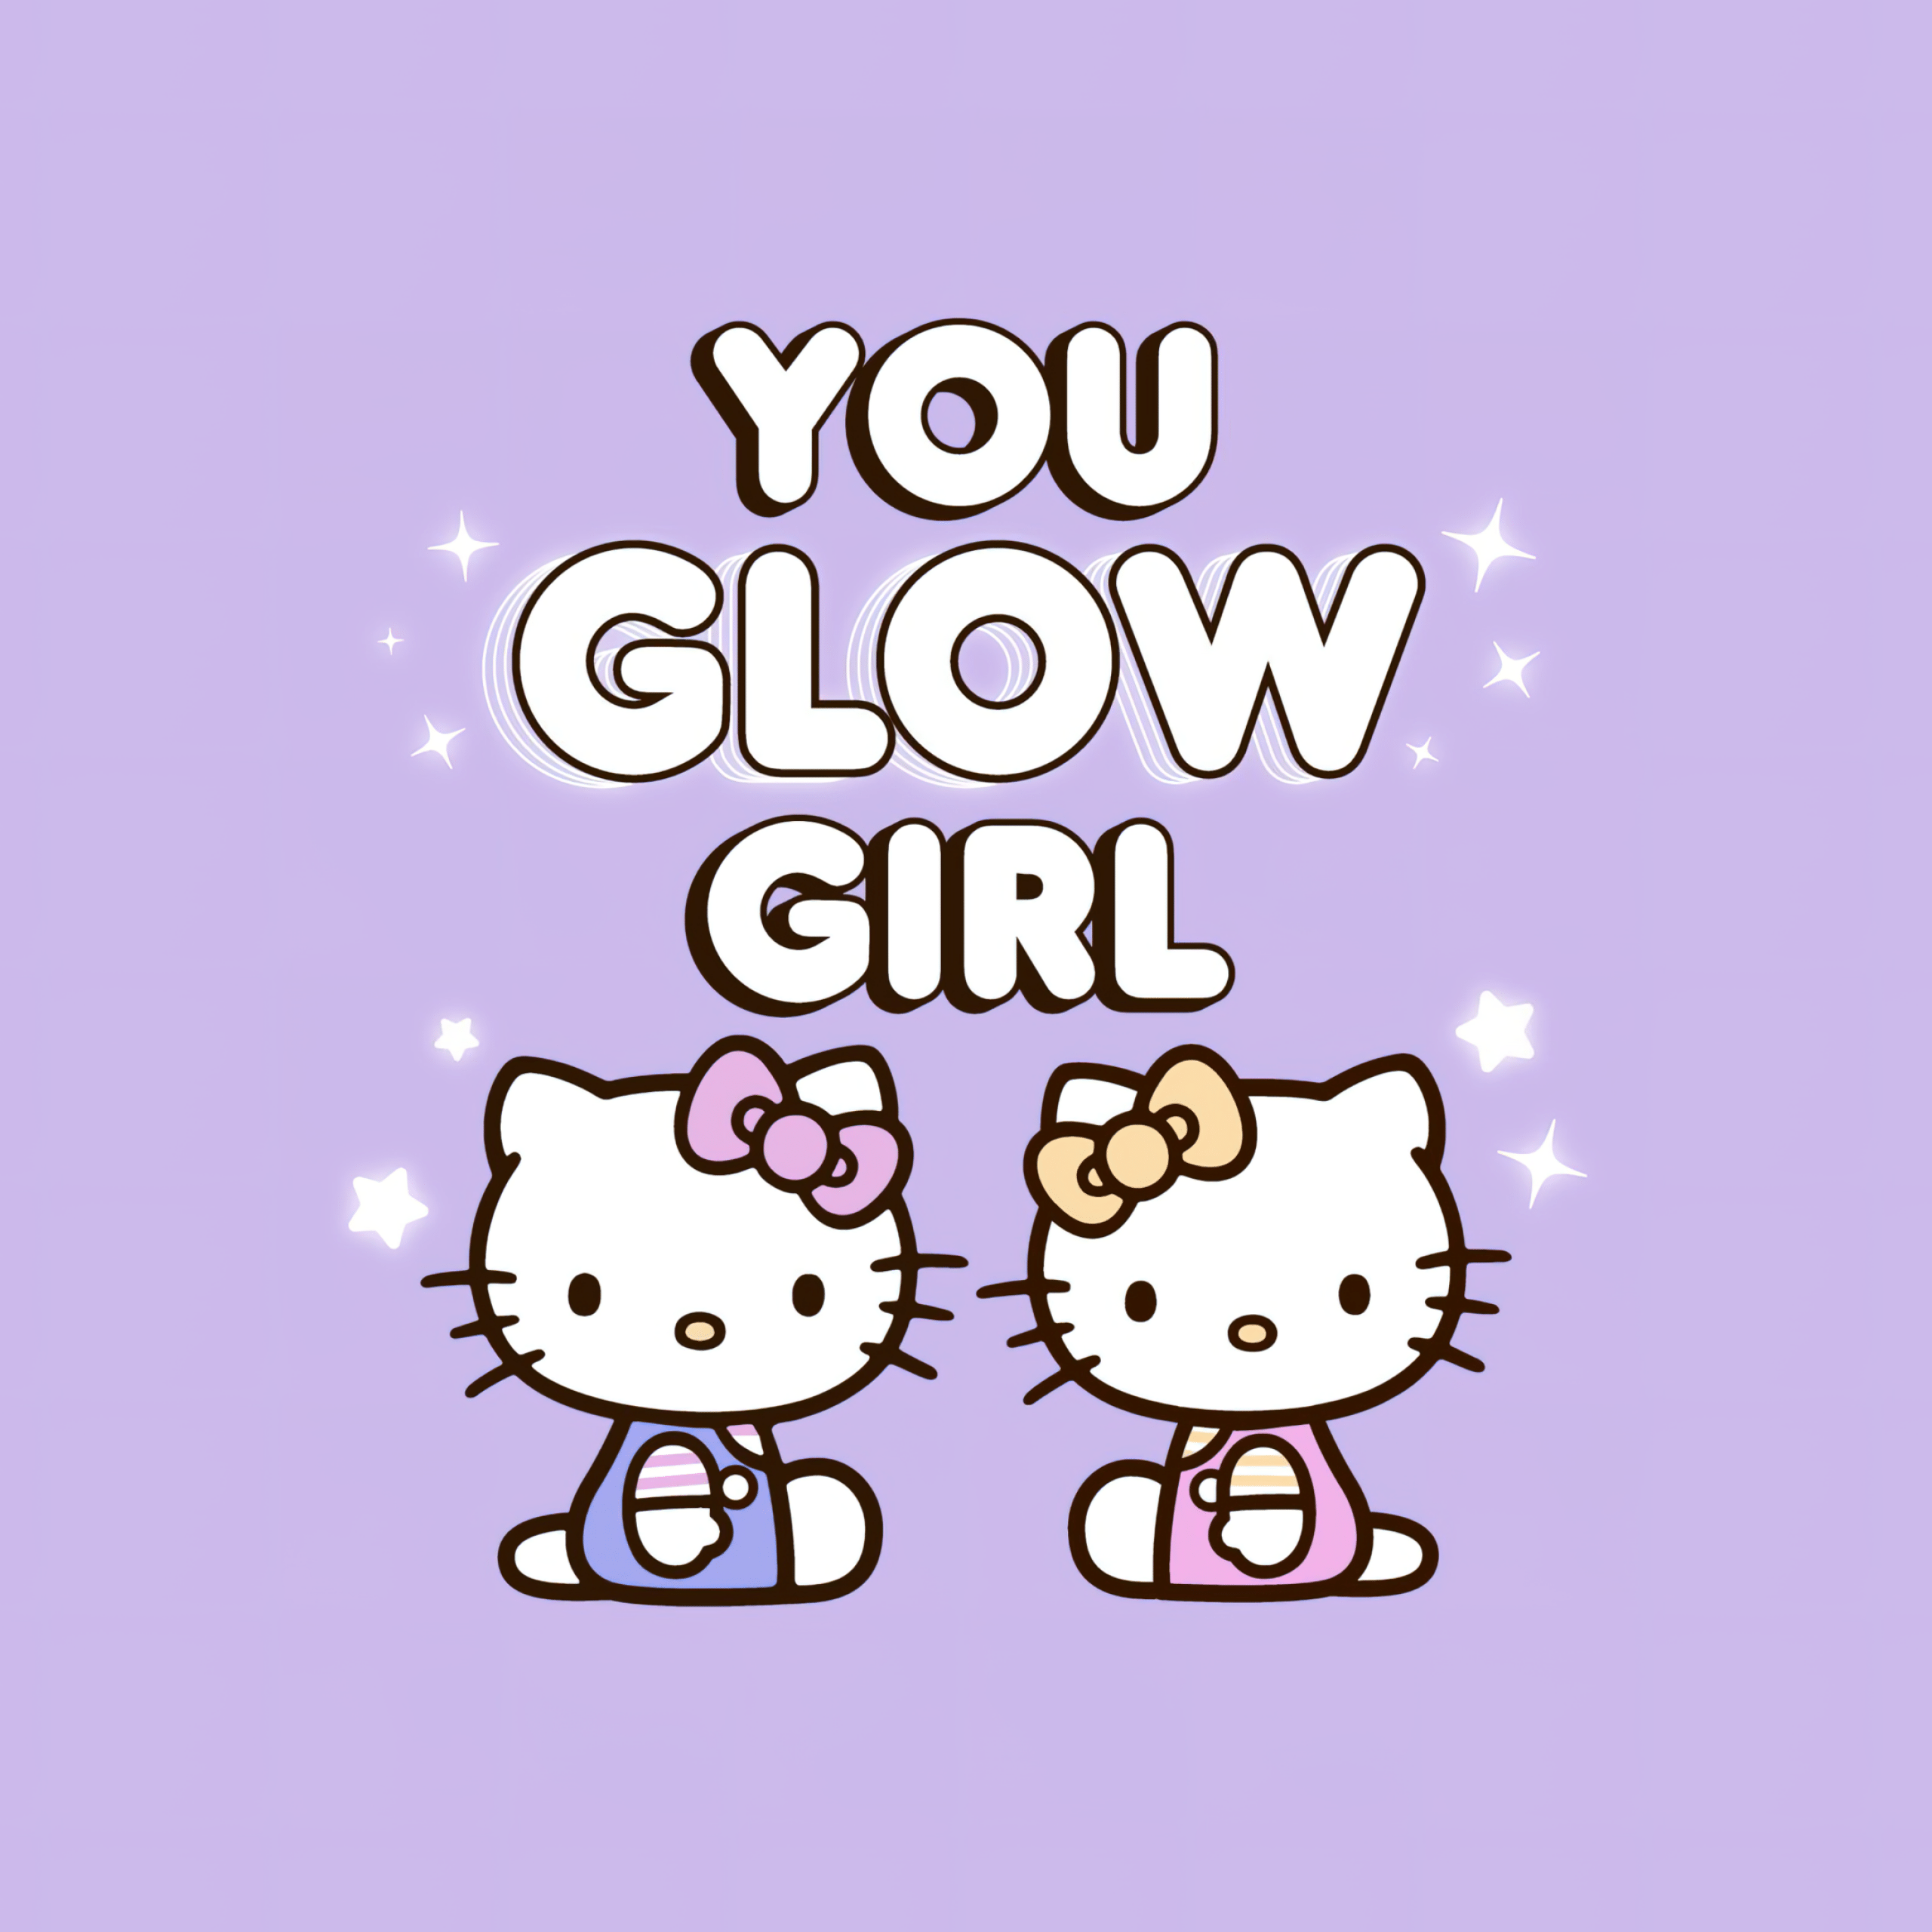 You glow girl Wallpaper 4K, Cute hello kitties